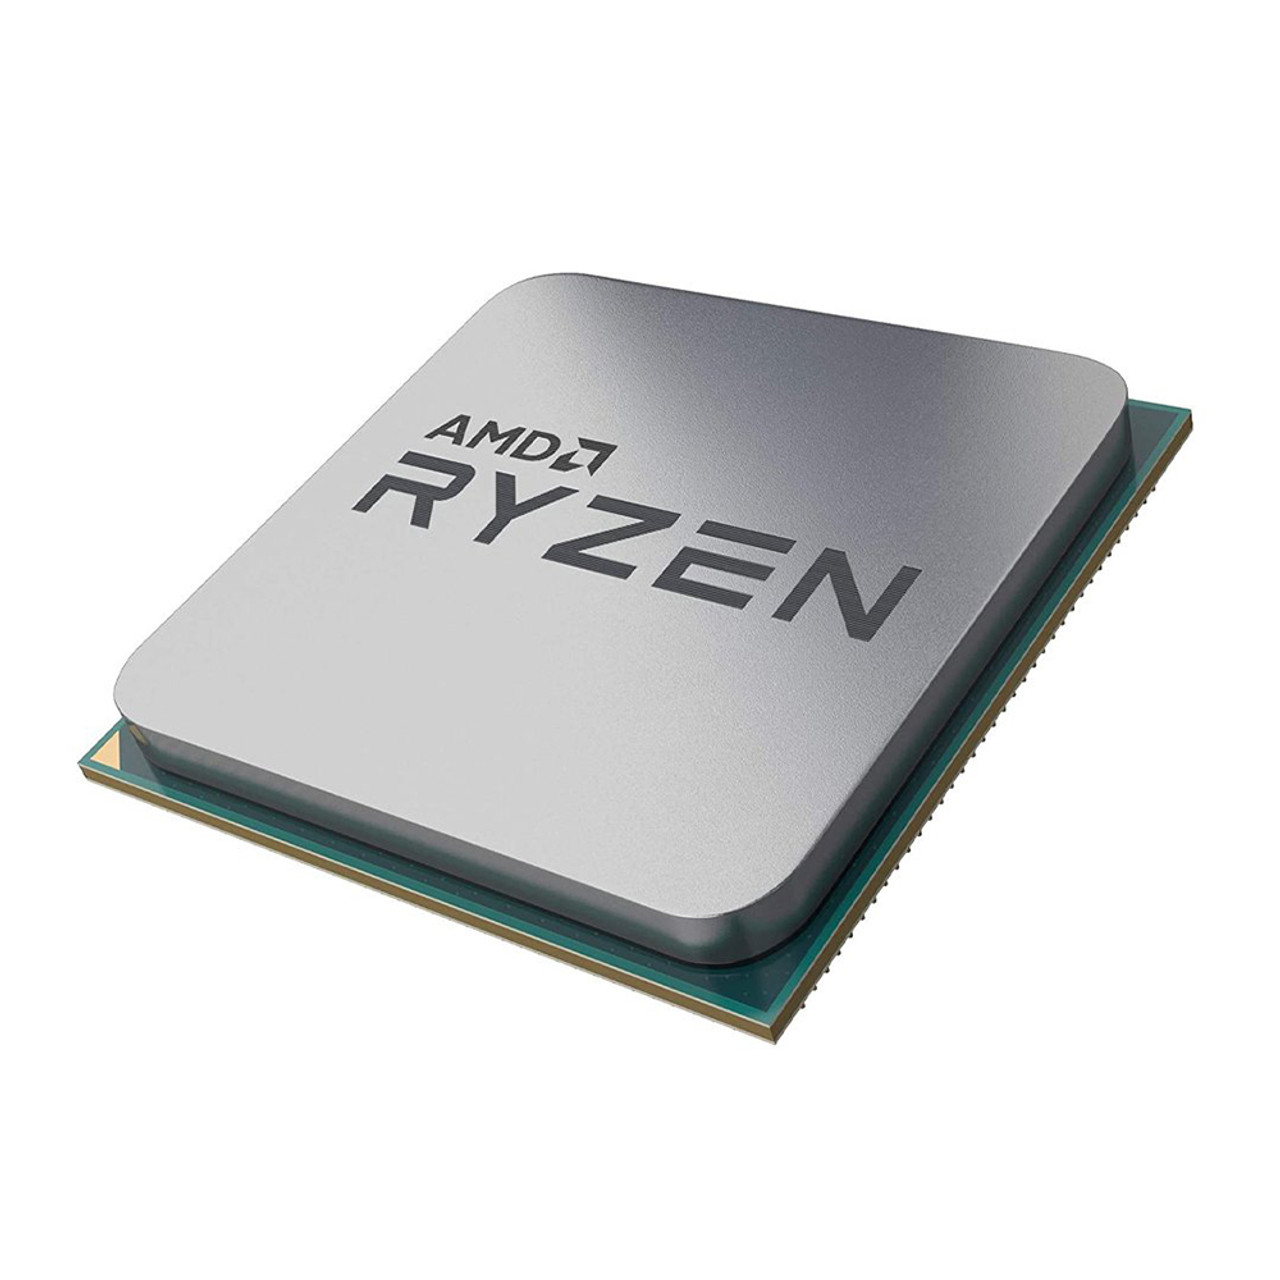 AMD Ryzen 5 3600 6-Core, 12-Thread Unlocked Desktop Processor with ...